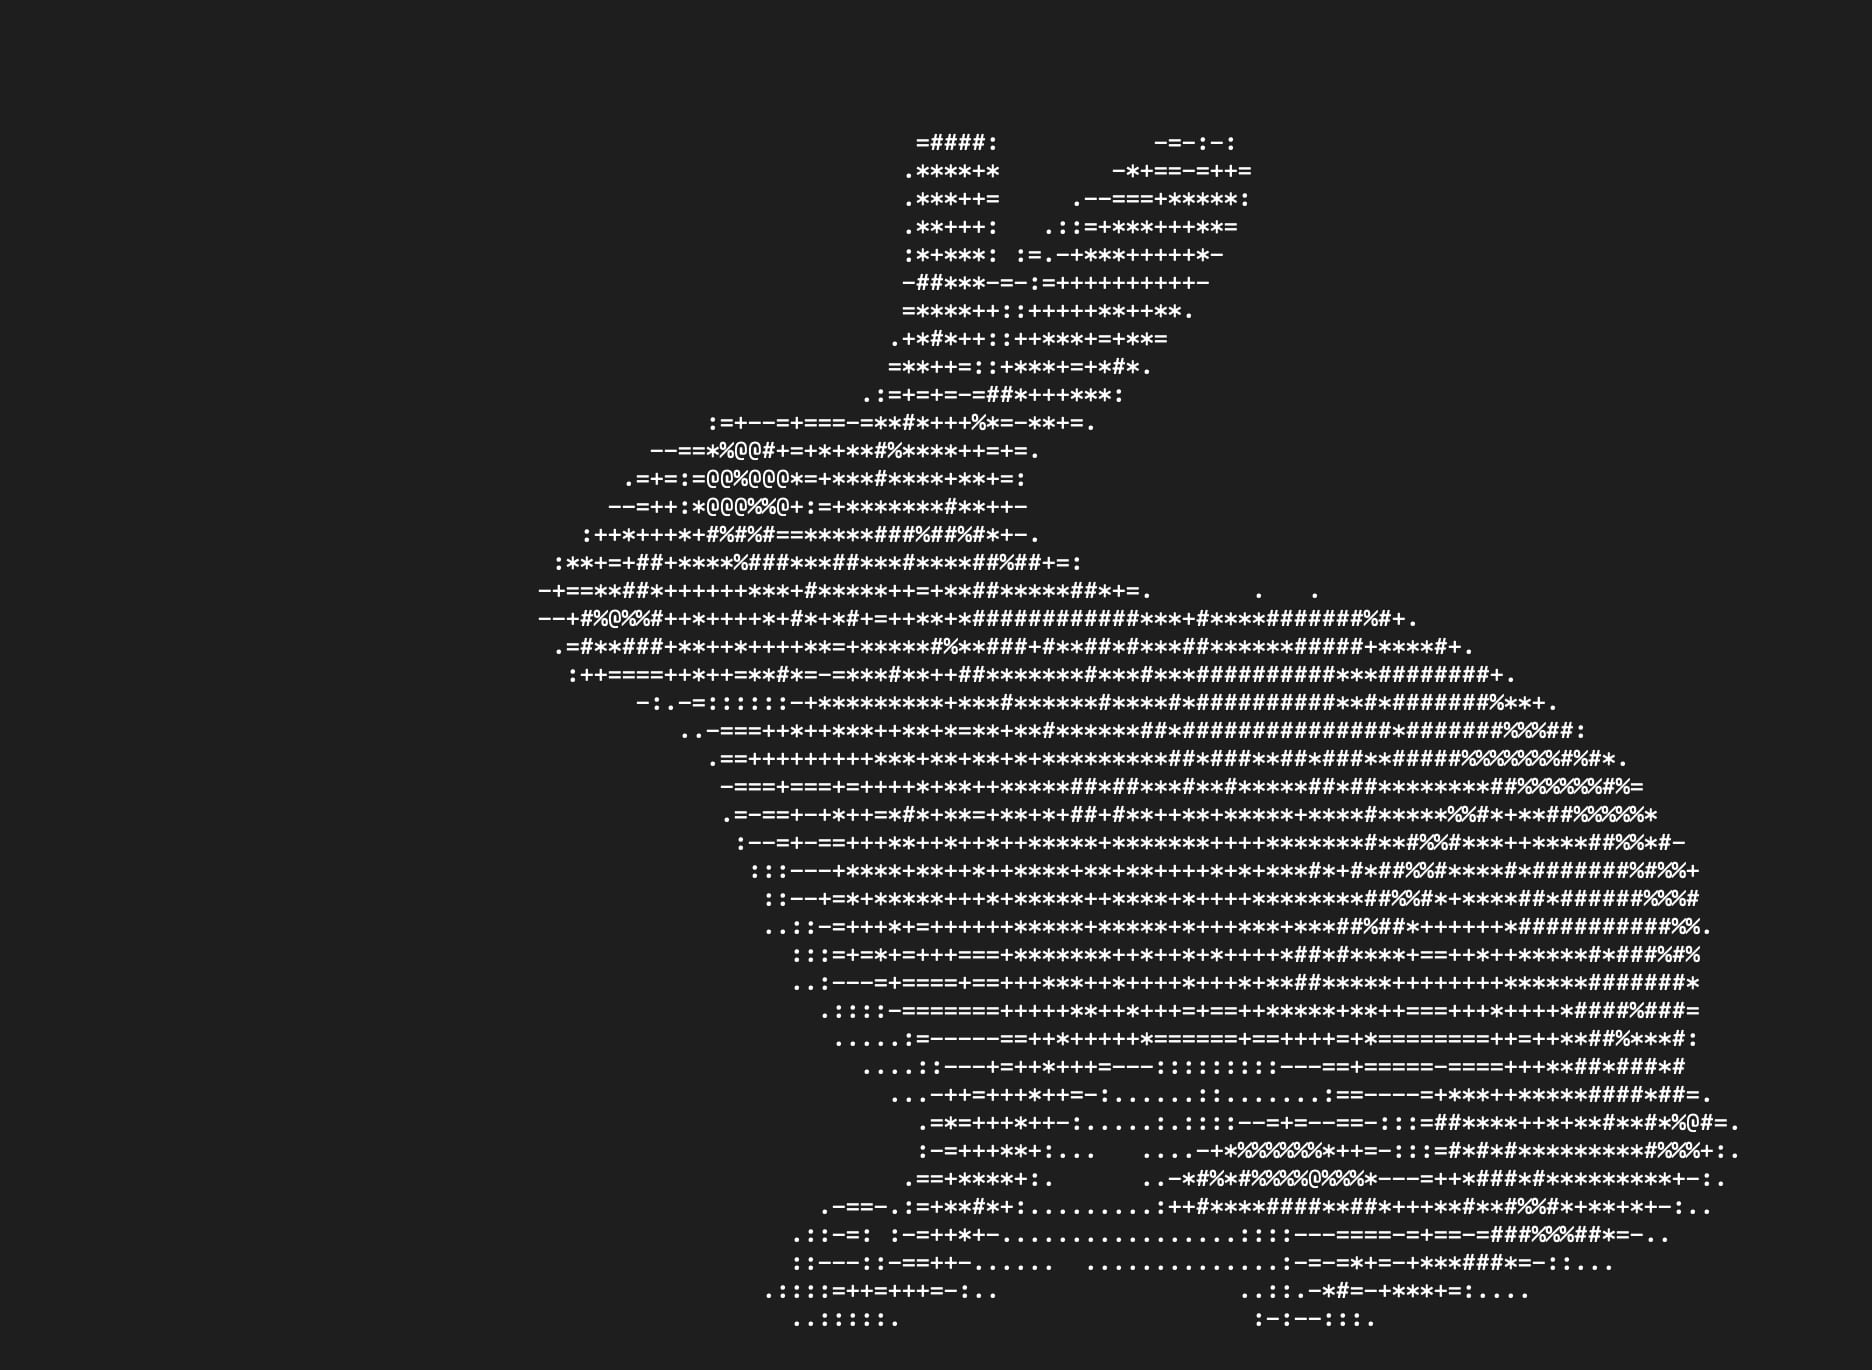 screenshot of terminal showing a rabbit shape made out of ASCII art